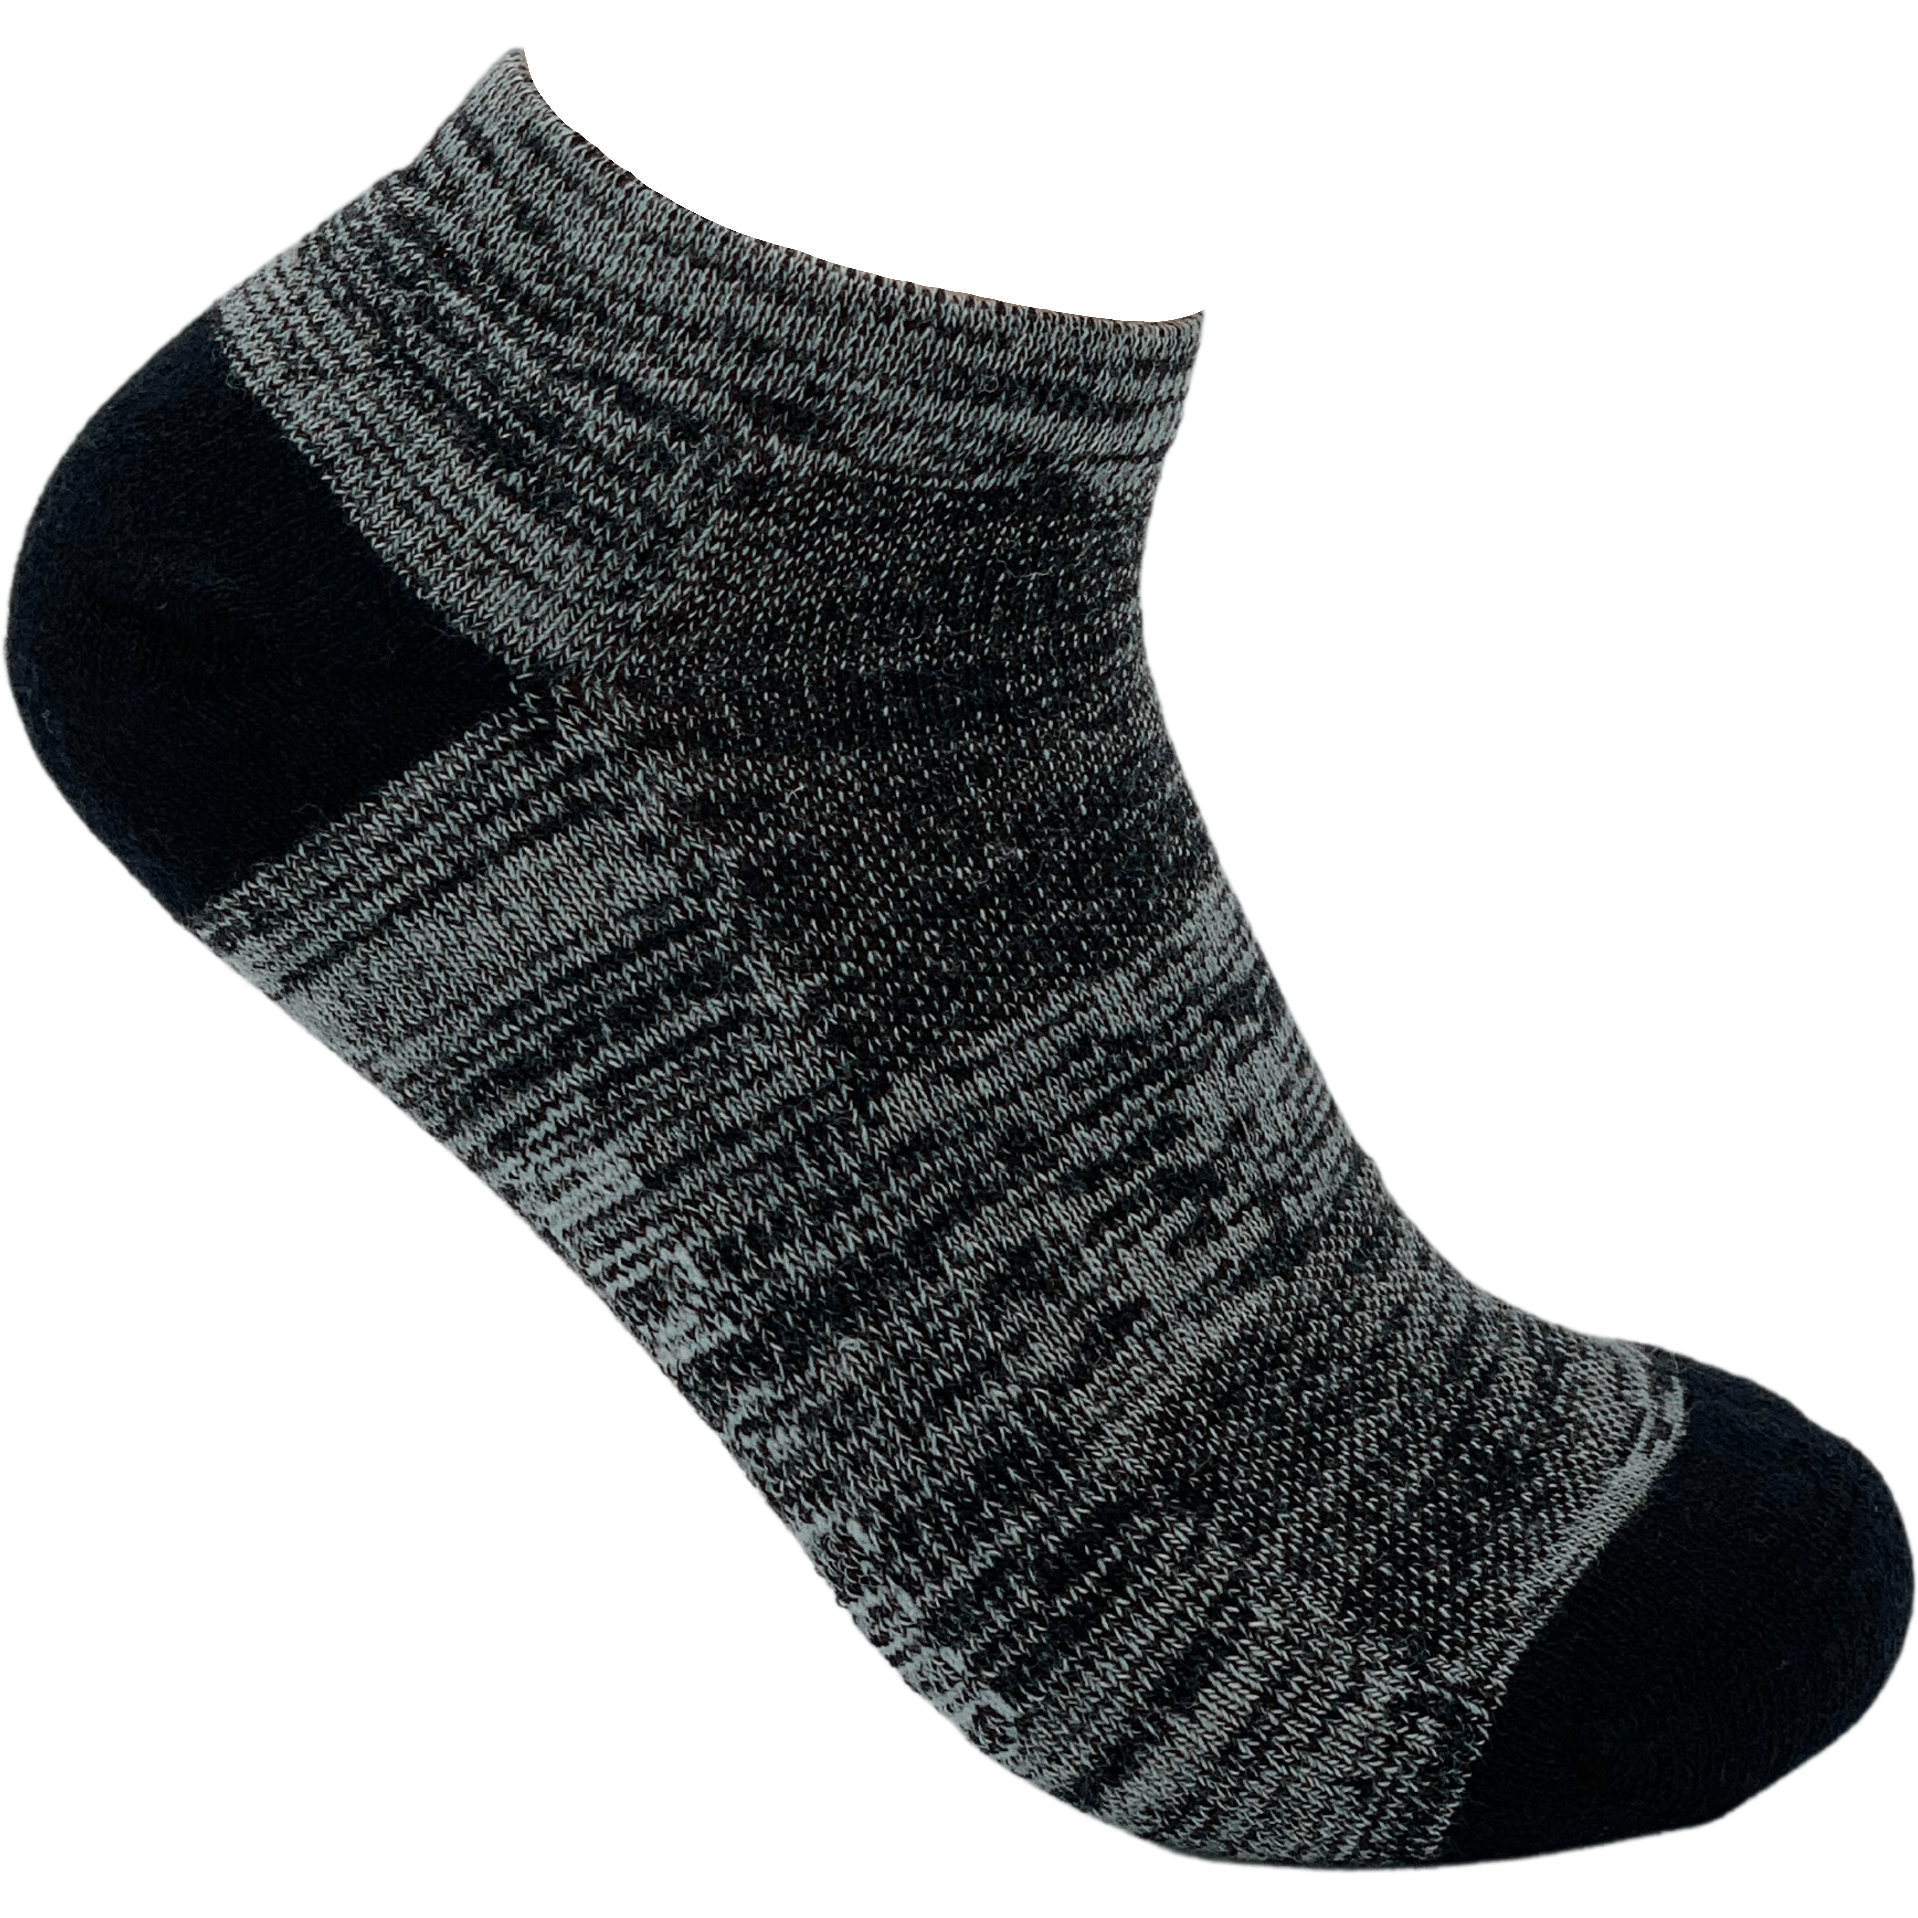 Lightweight Merino Wool Low Cut Socks - Wildly Goods